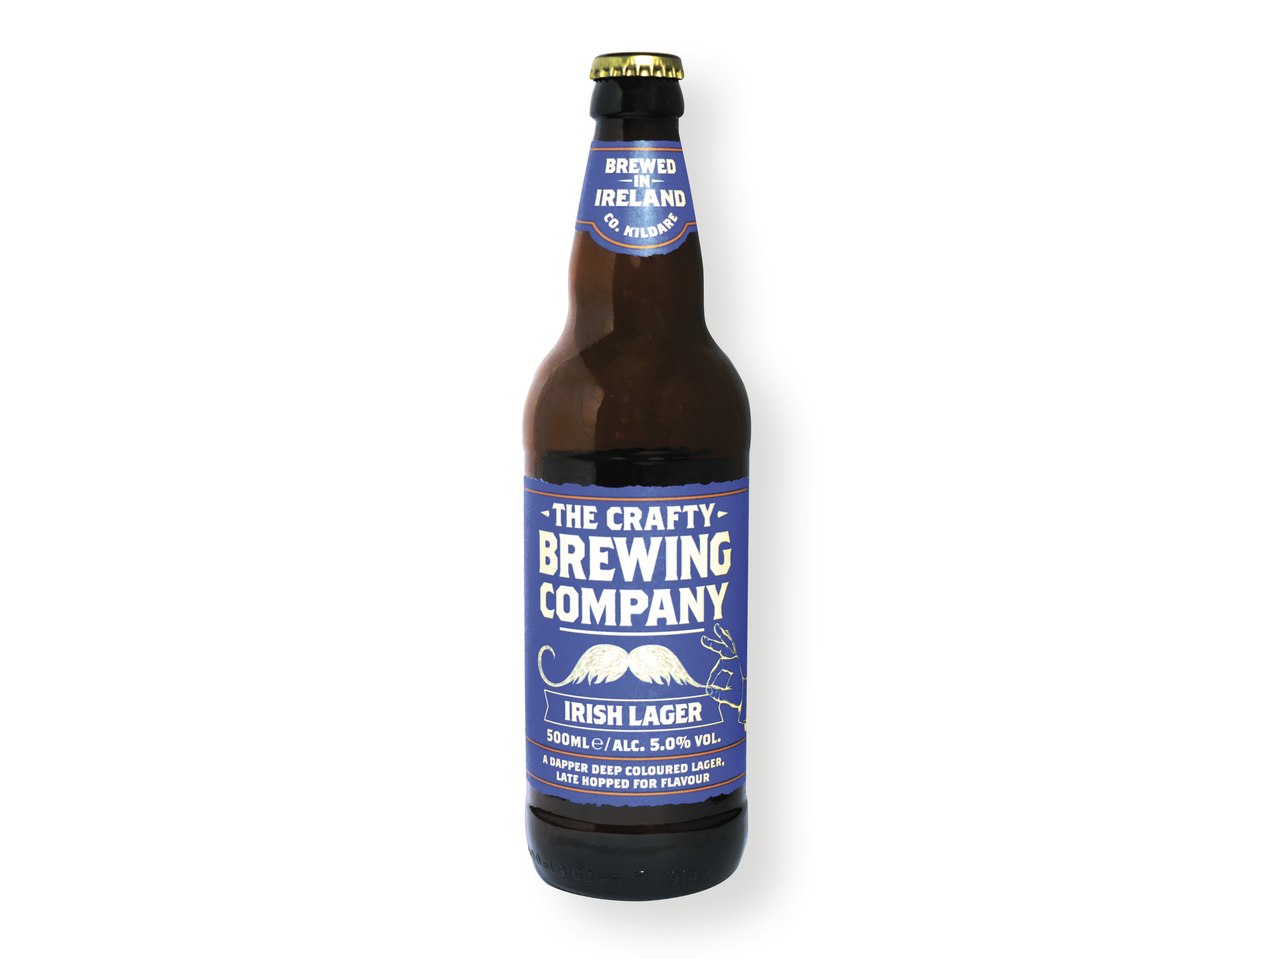 'The Crafty Brewing Company(R)' Cerveza rubia irlandesa